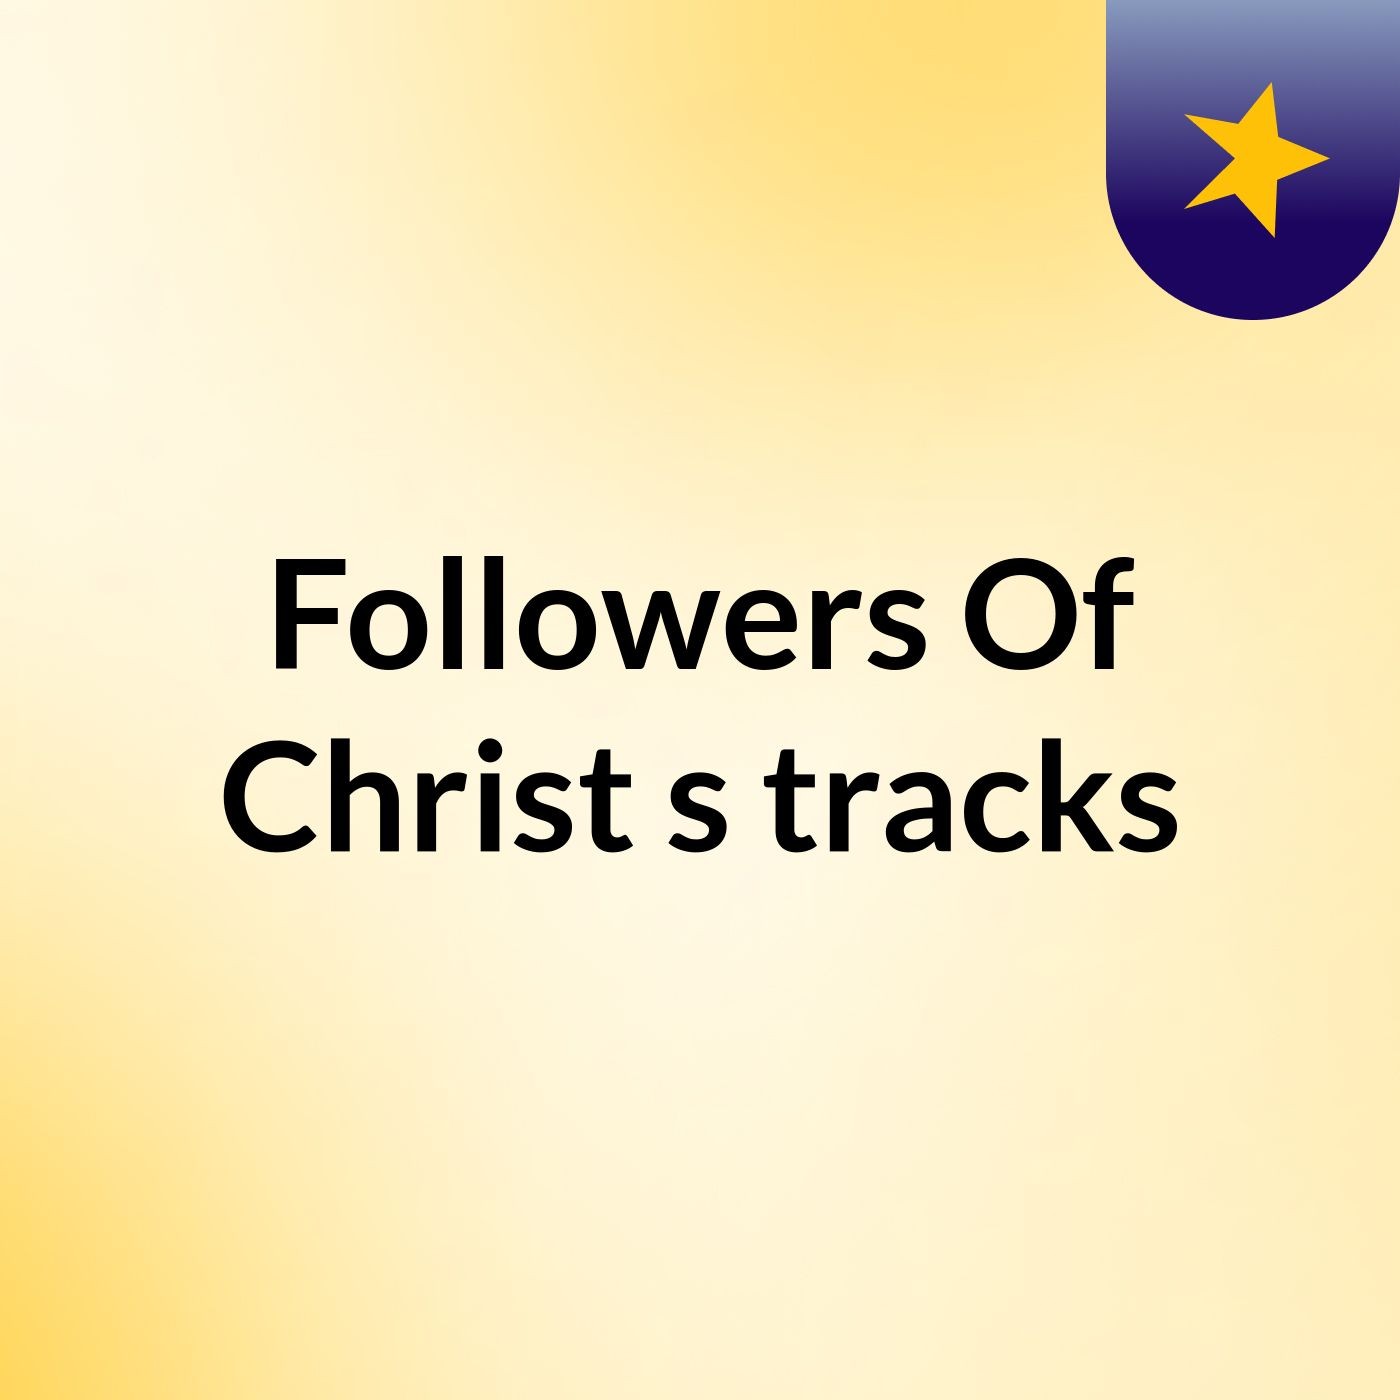 Followers Of Christ's tracks